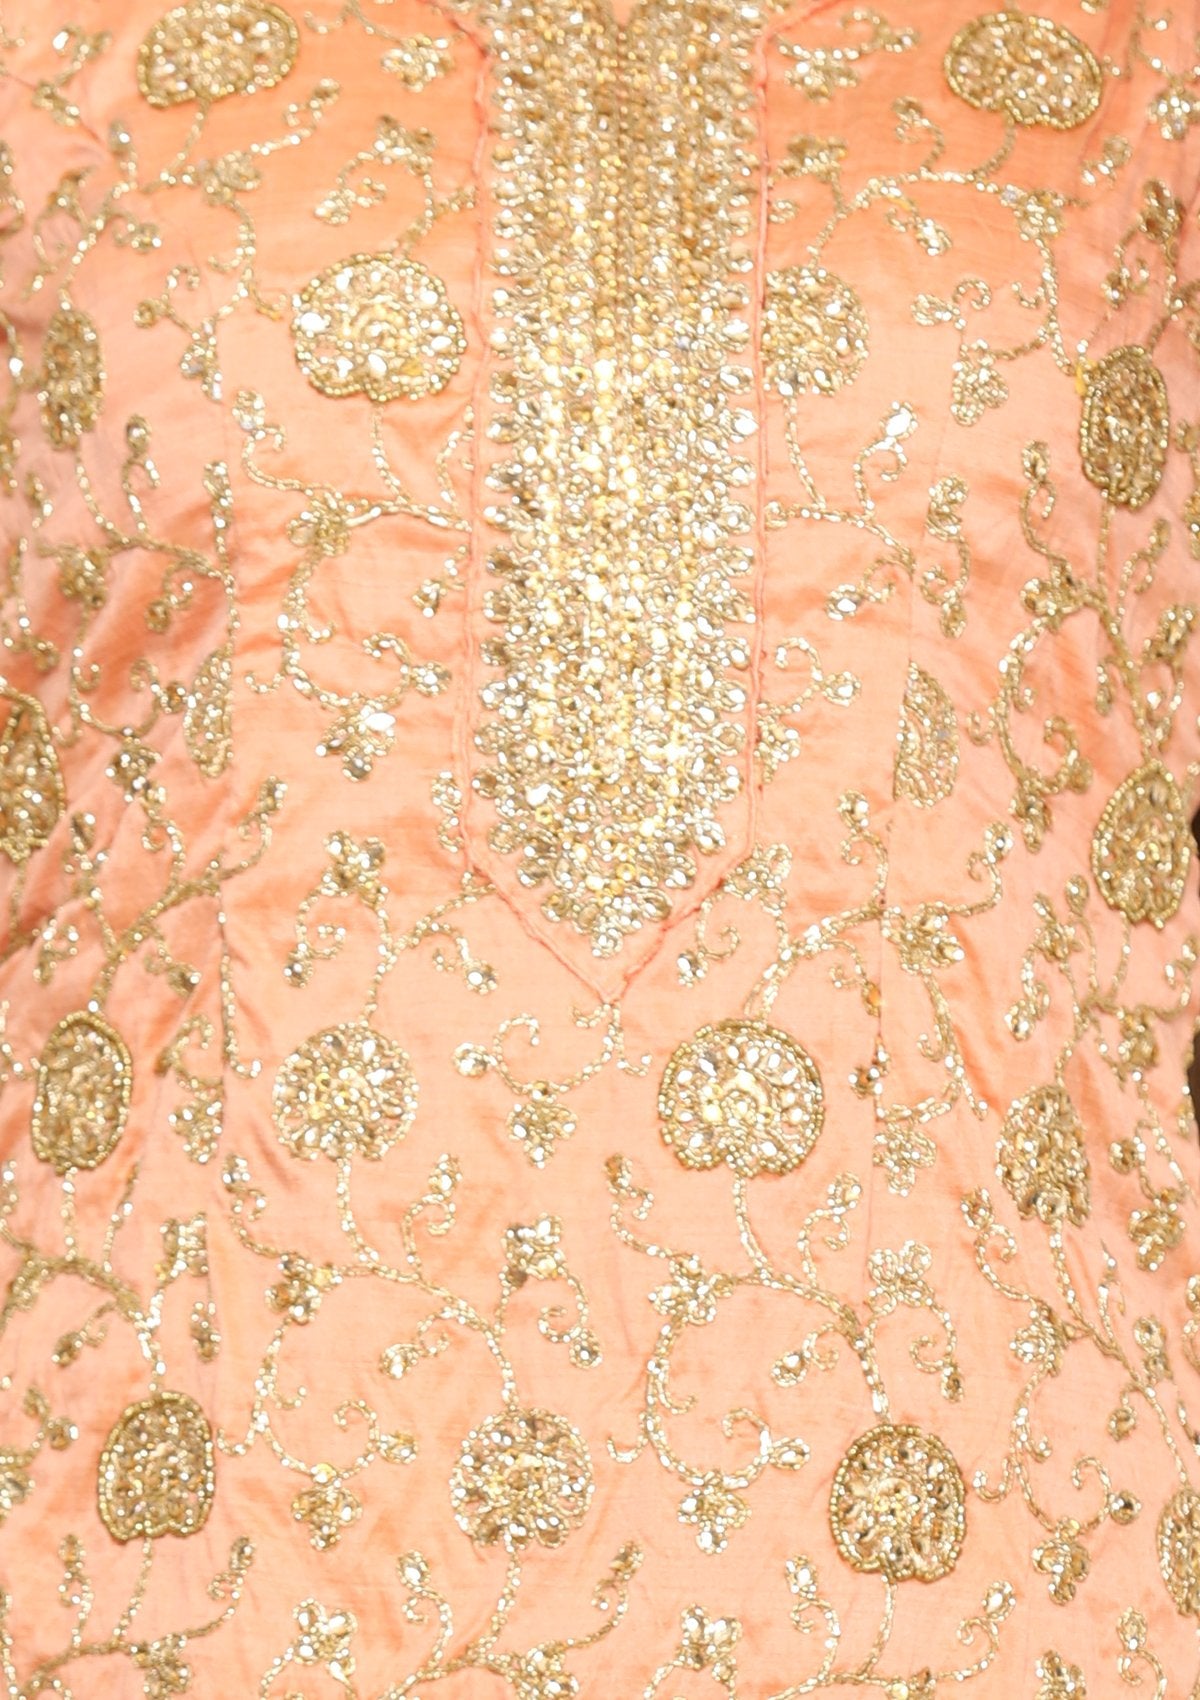 Peach and gold designer salwar suit-Koskii